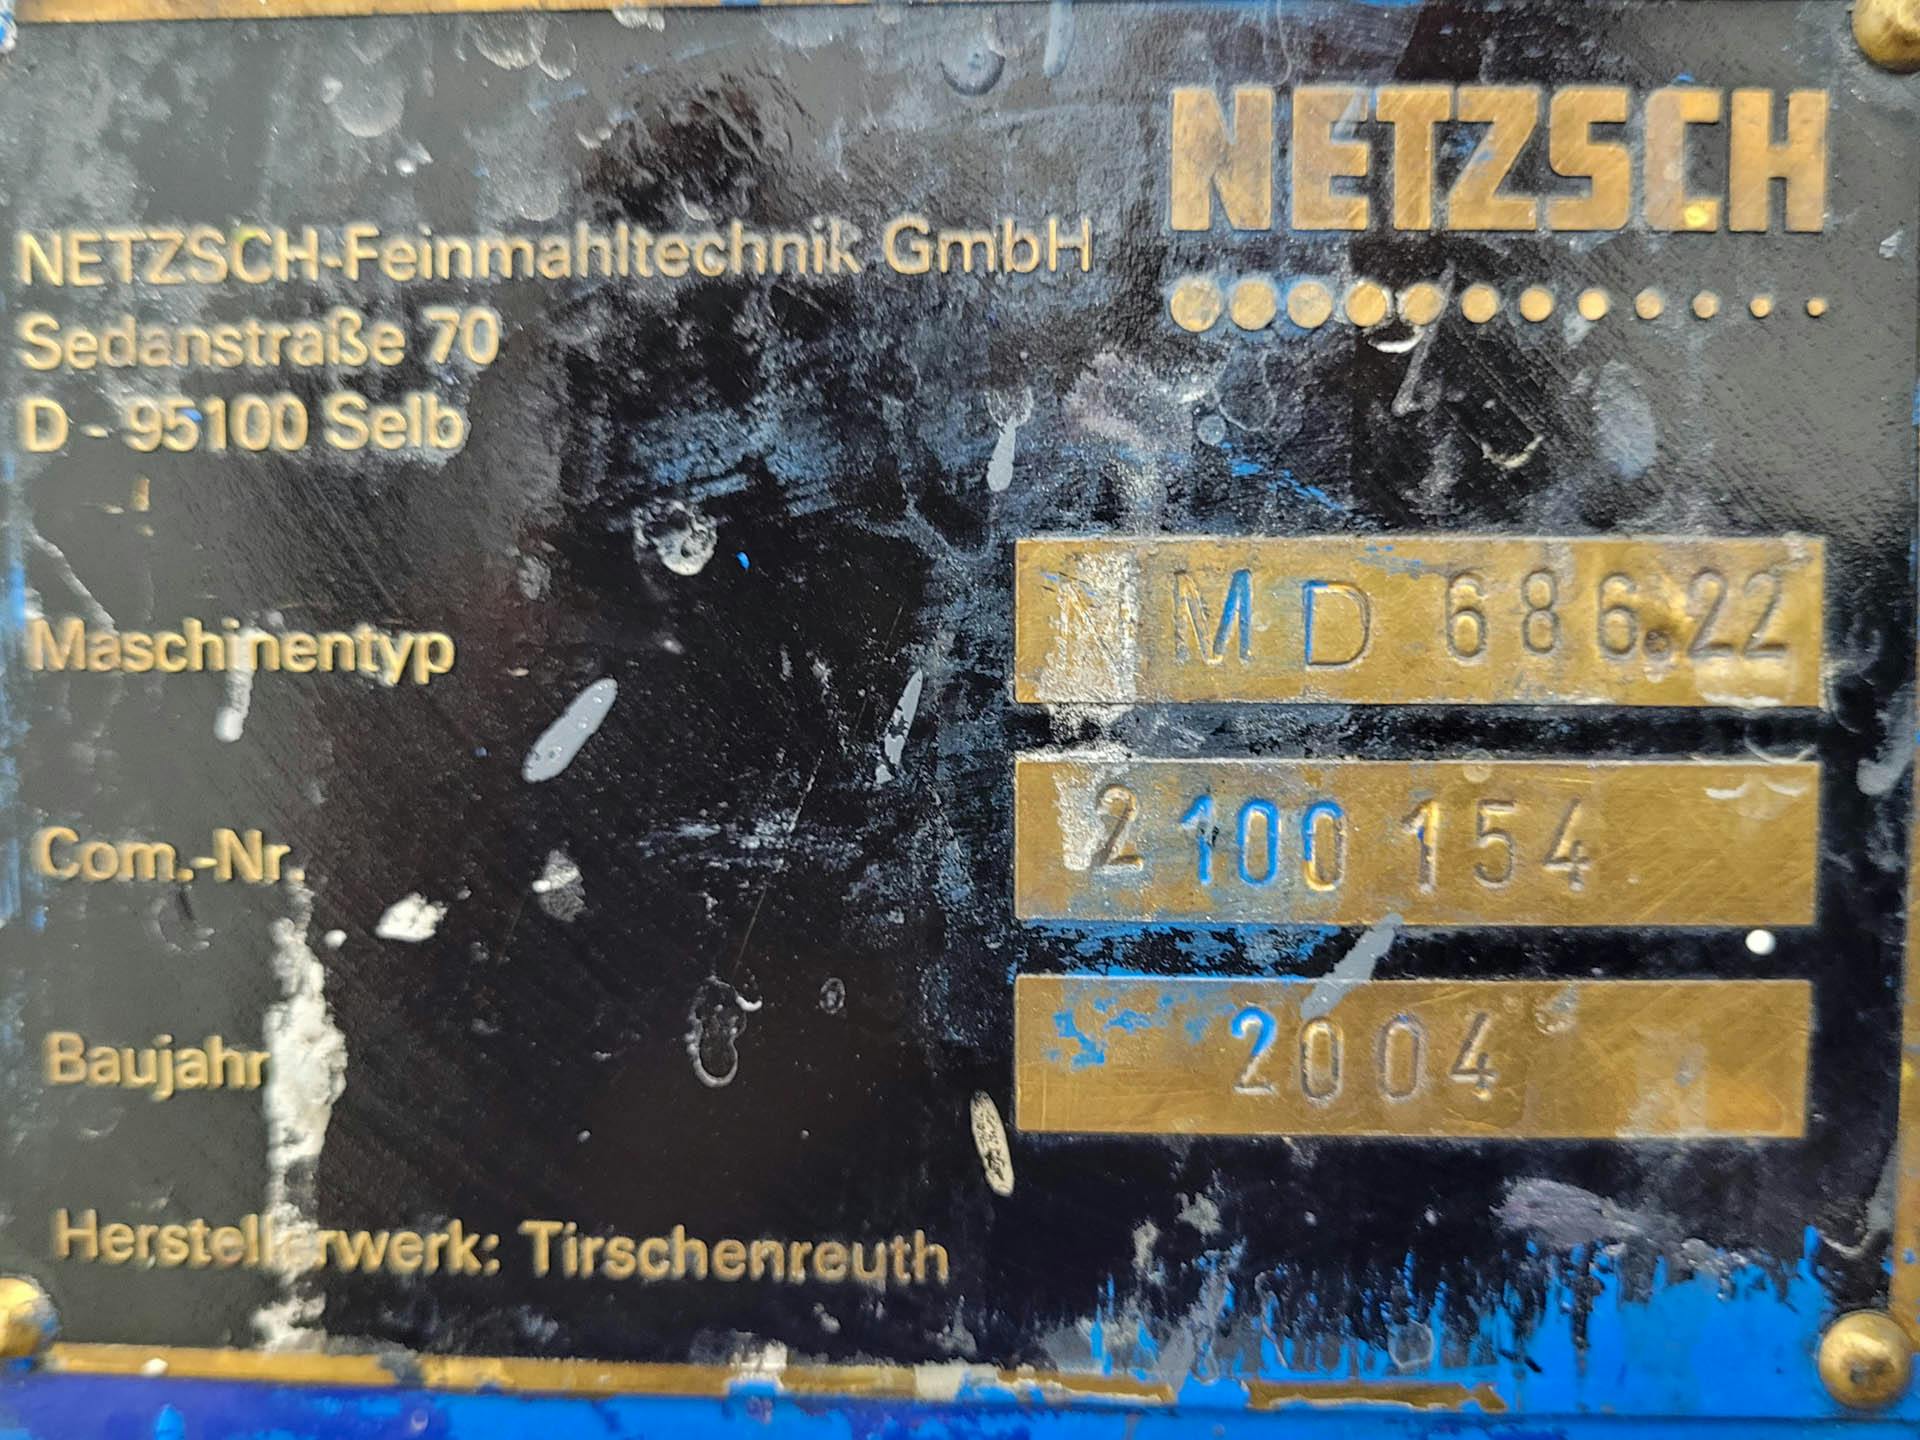 Netzsch NMD 686 22 - Диссольвер - image 8